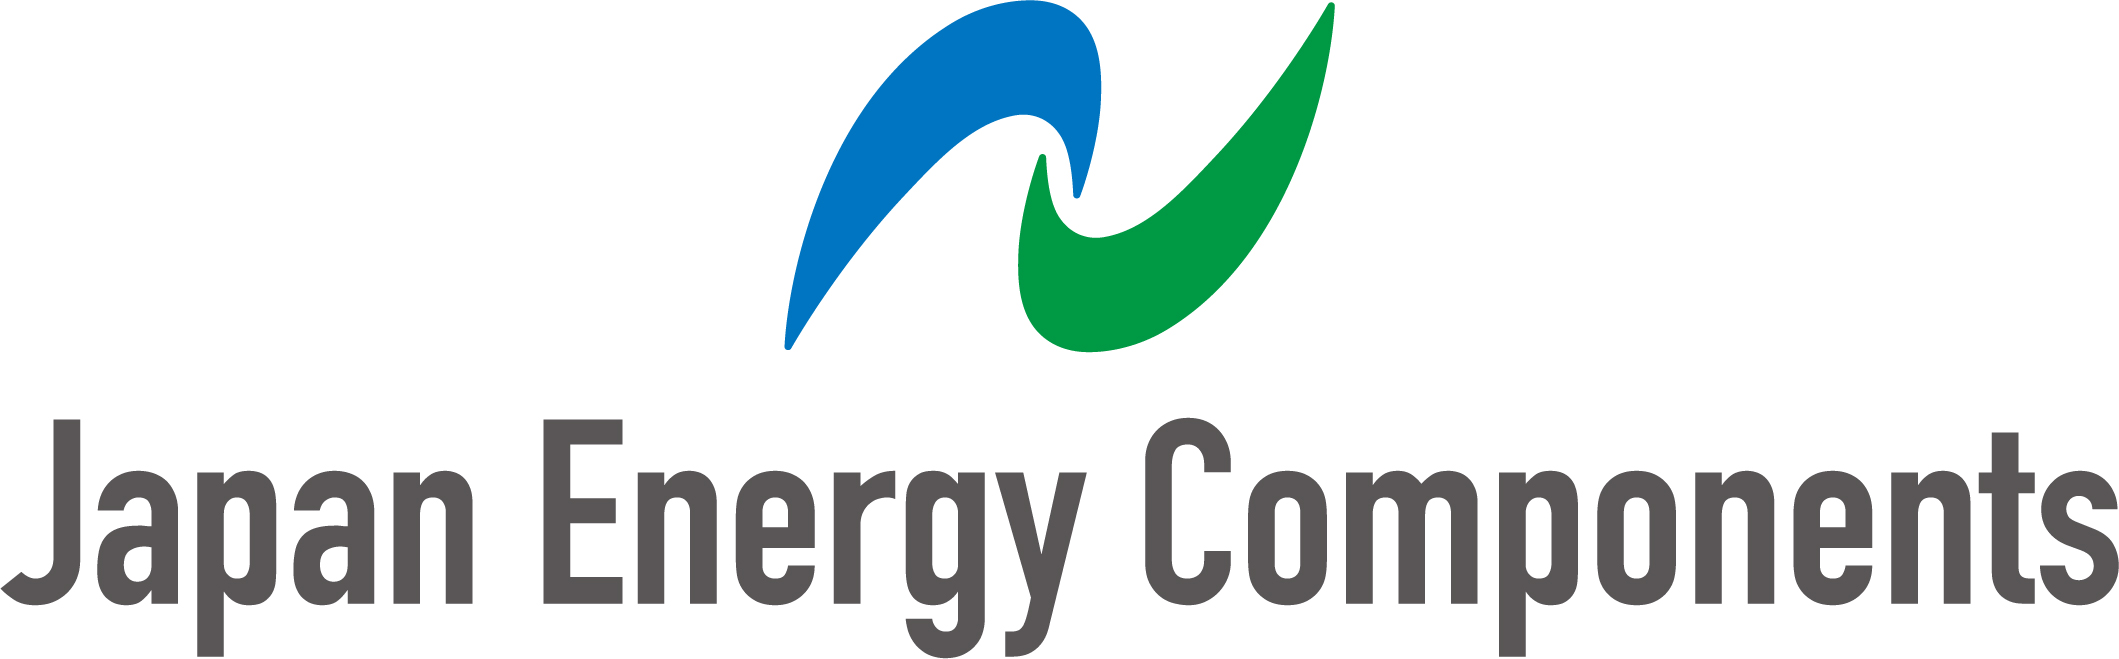 Profile image for Japan Energy Components Co., Ltd. - JEC